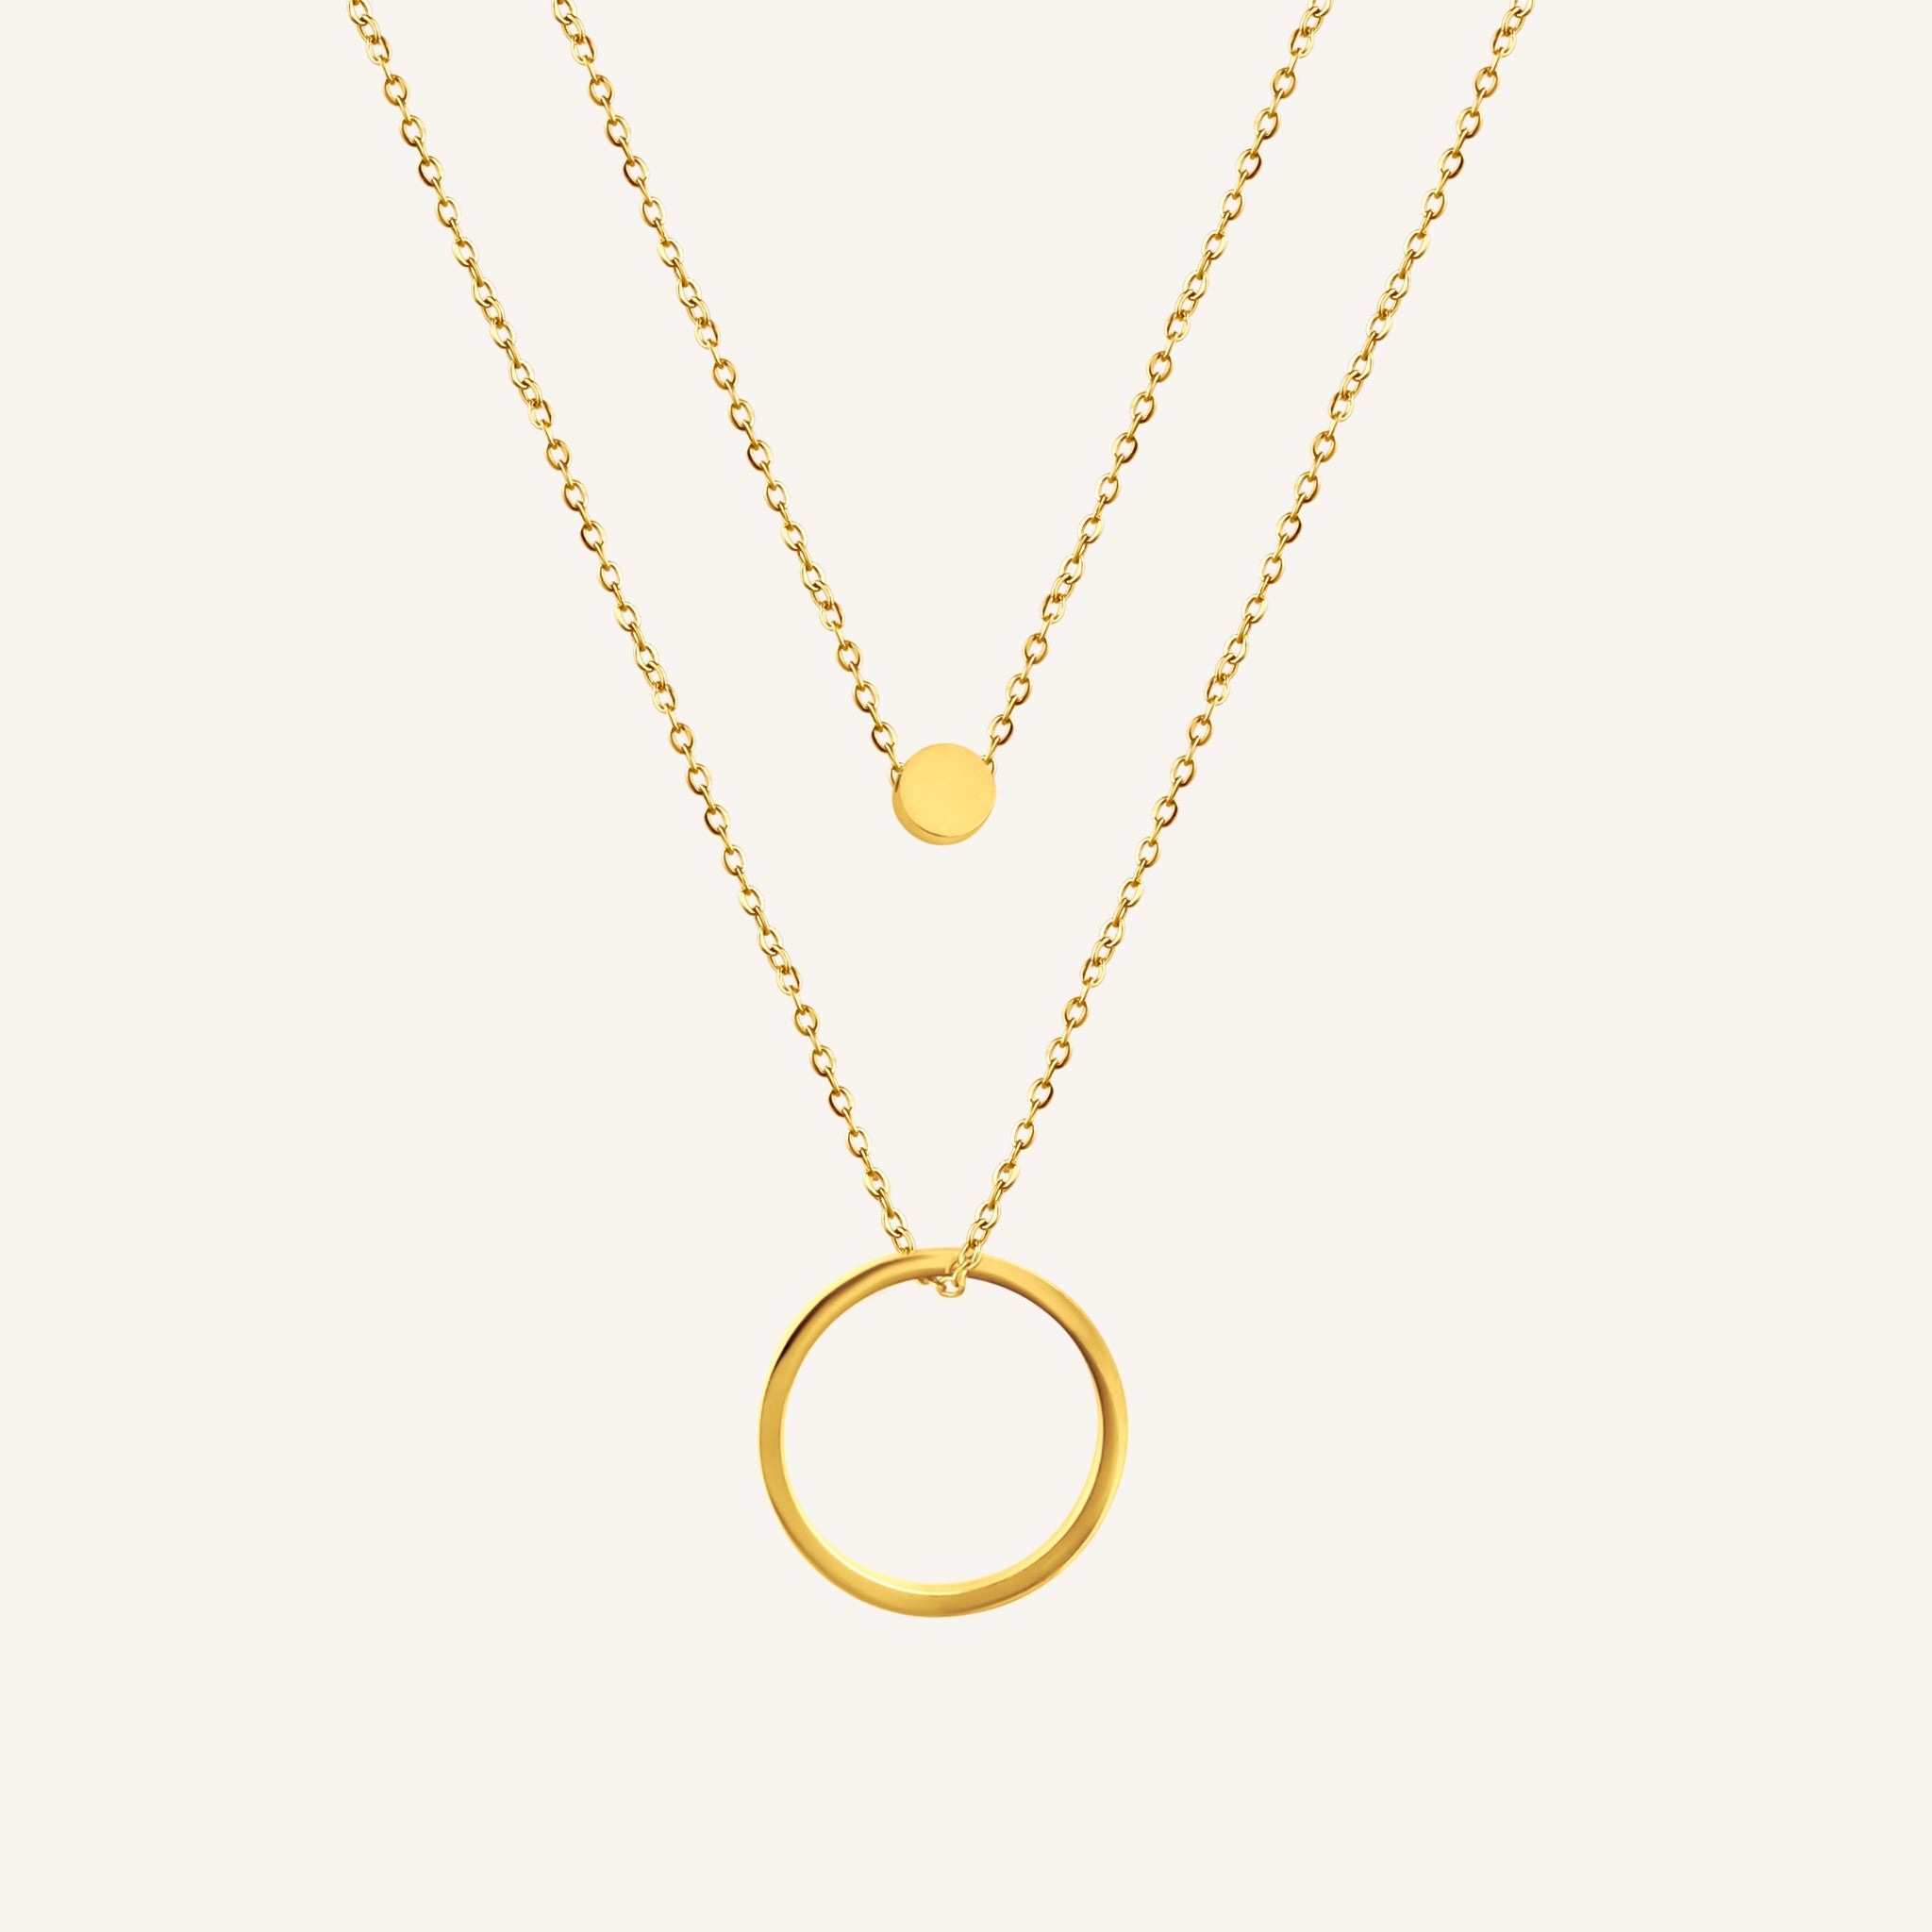 Golden Circles Necklace Layered